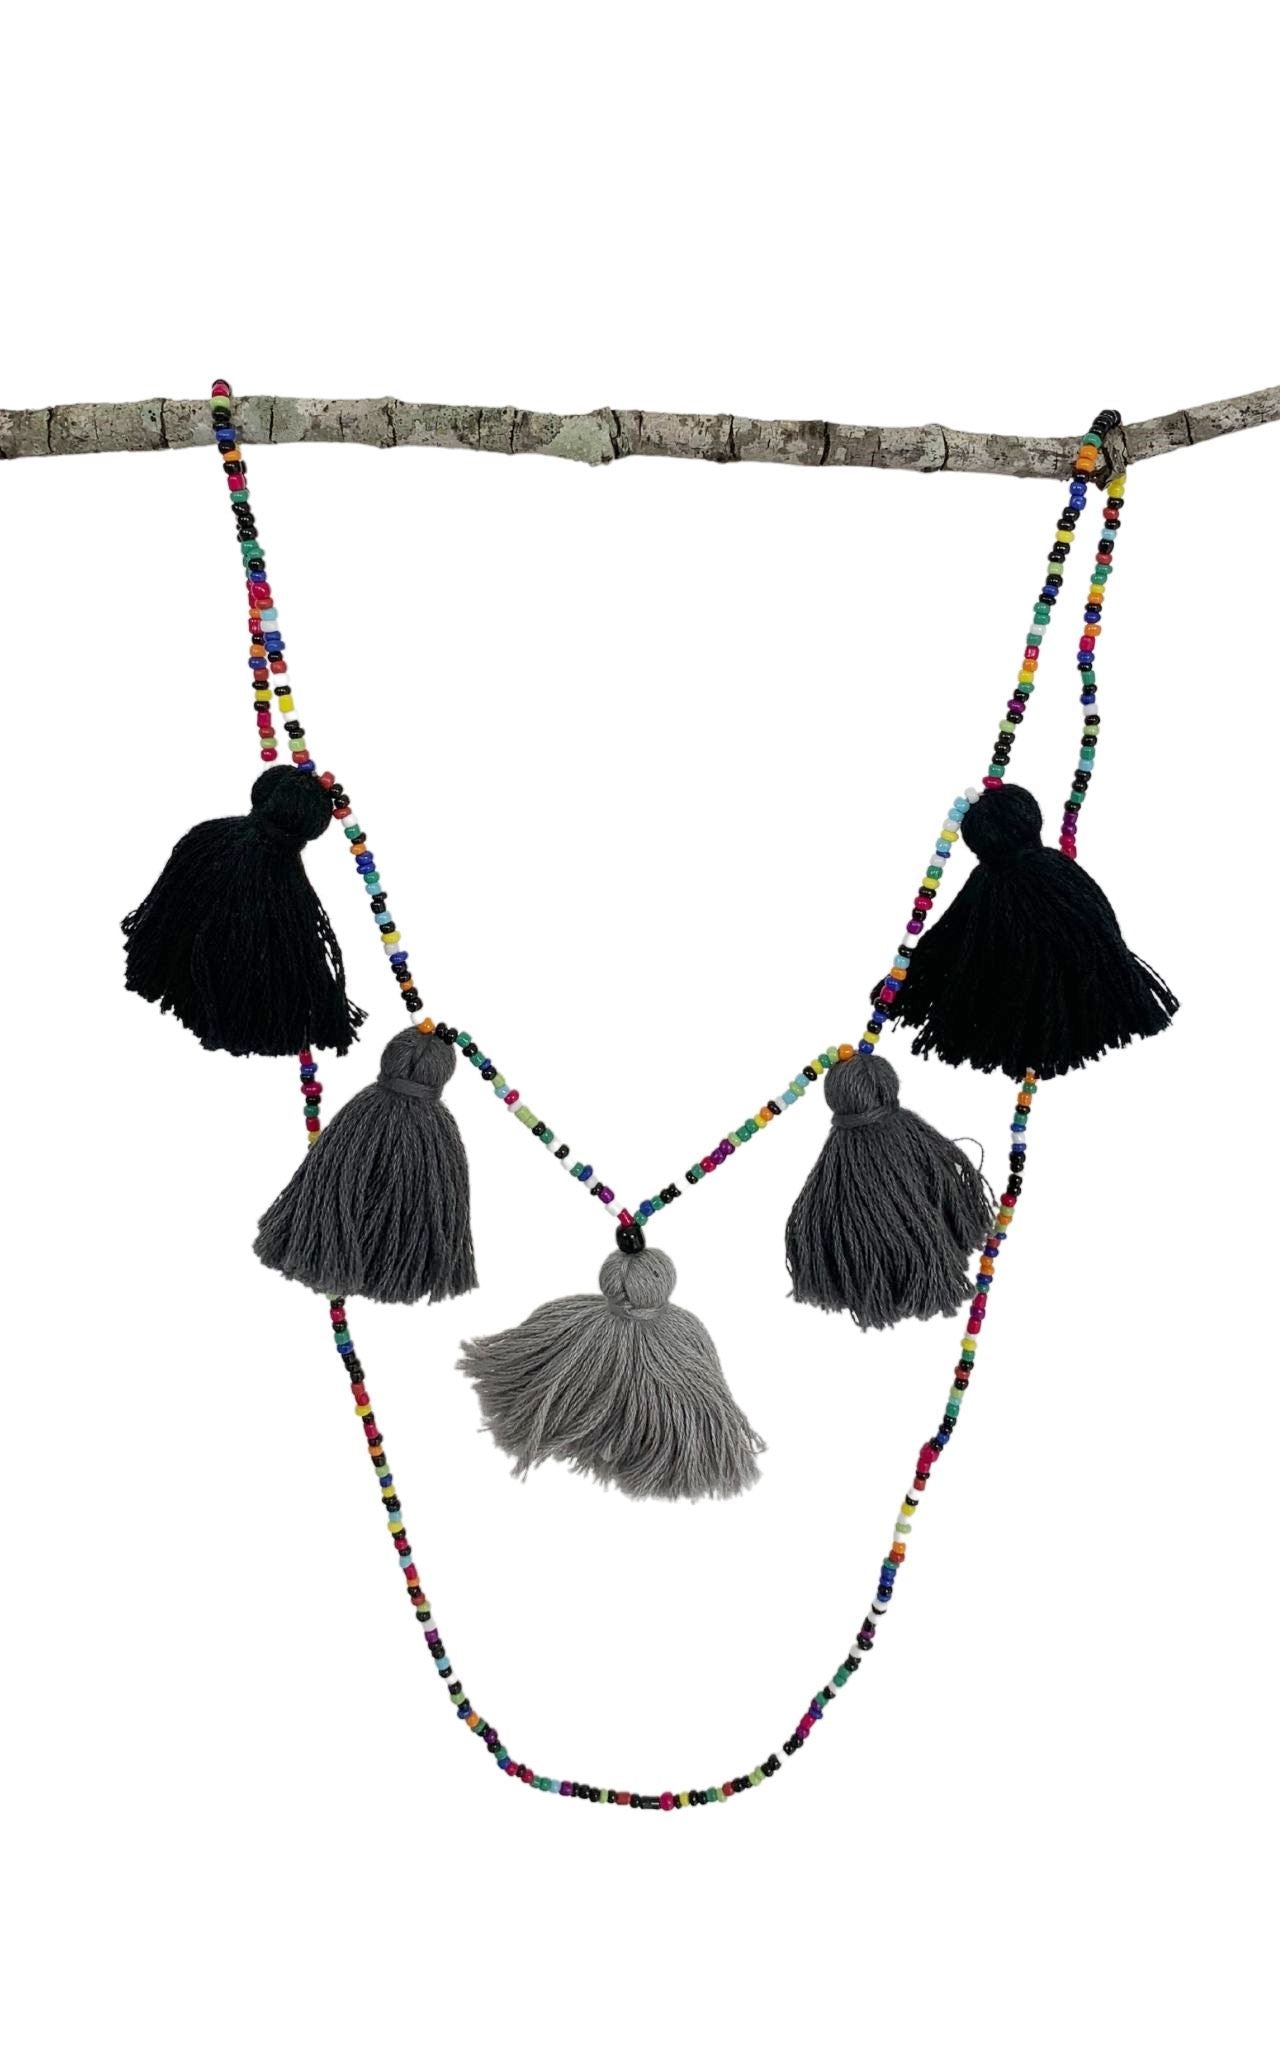 Surya Australia Ethical Cotton Tassel Necklaces from Nepal - Shakti